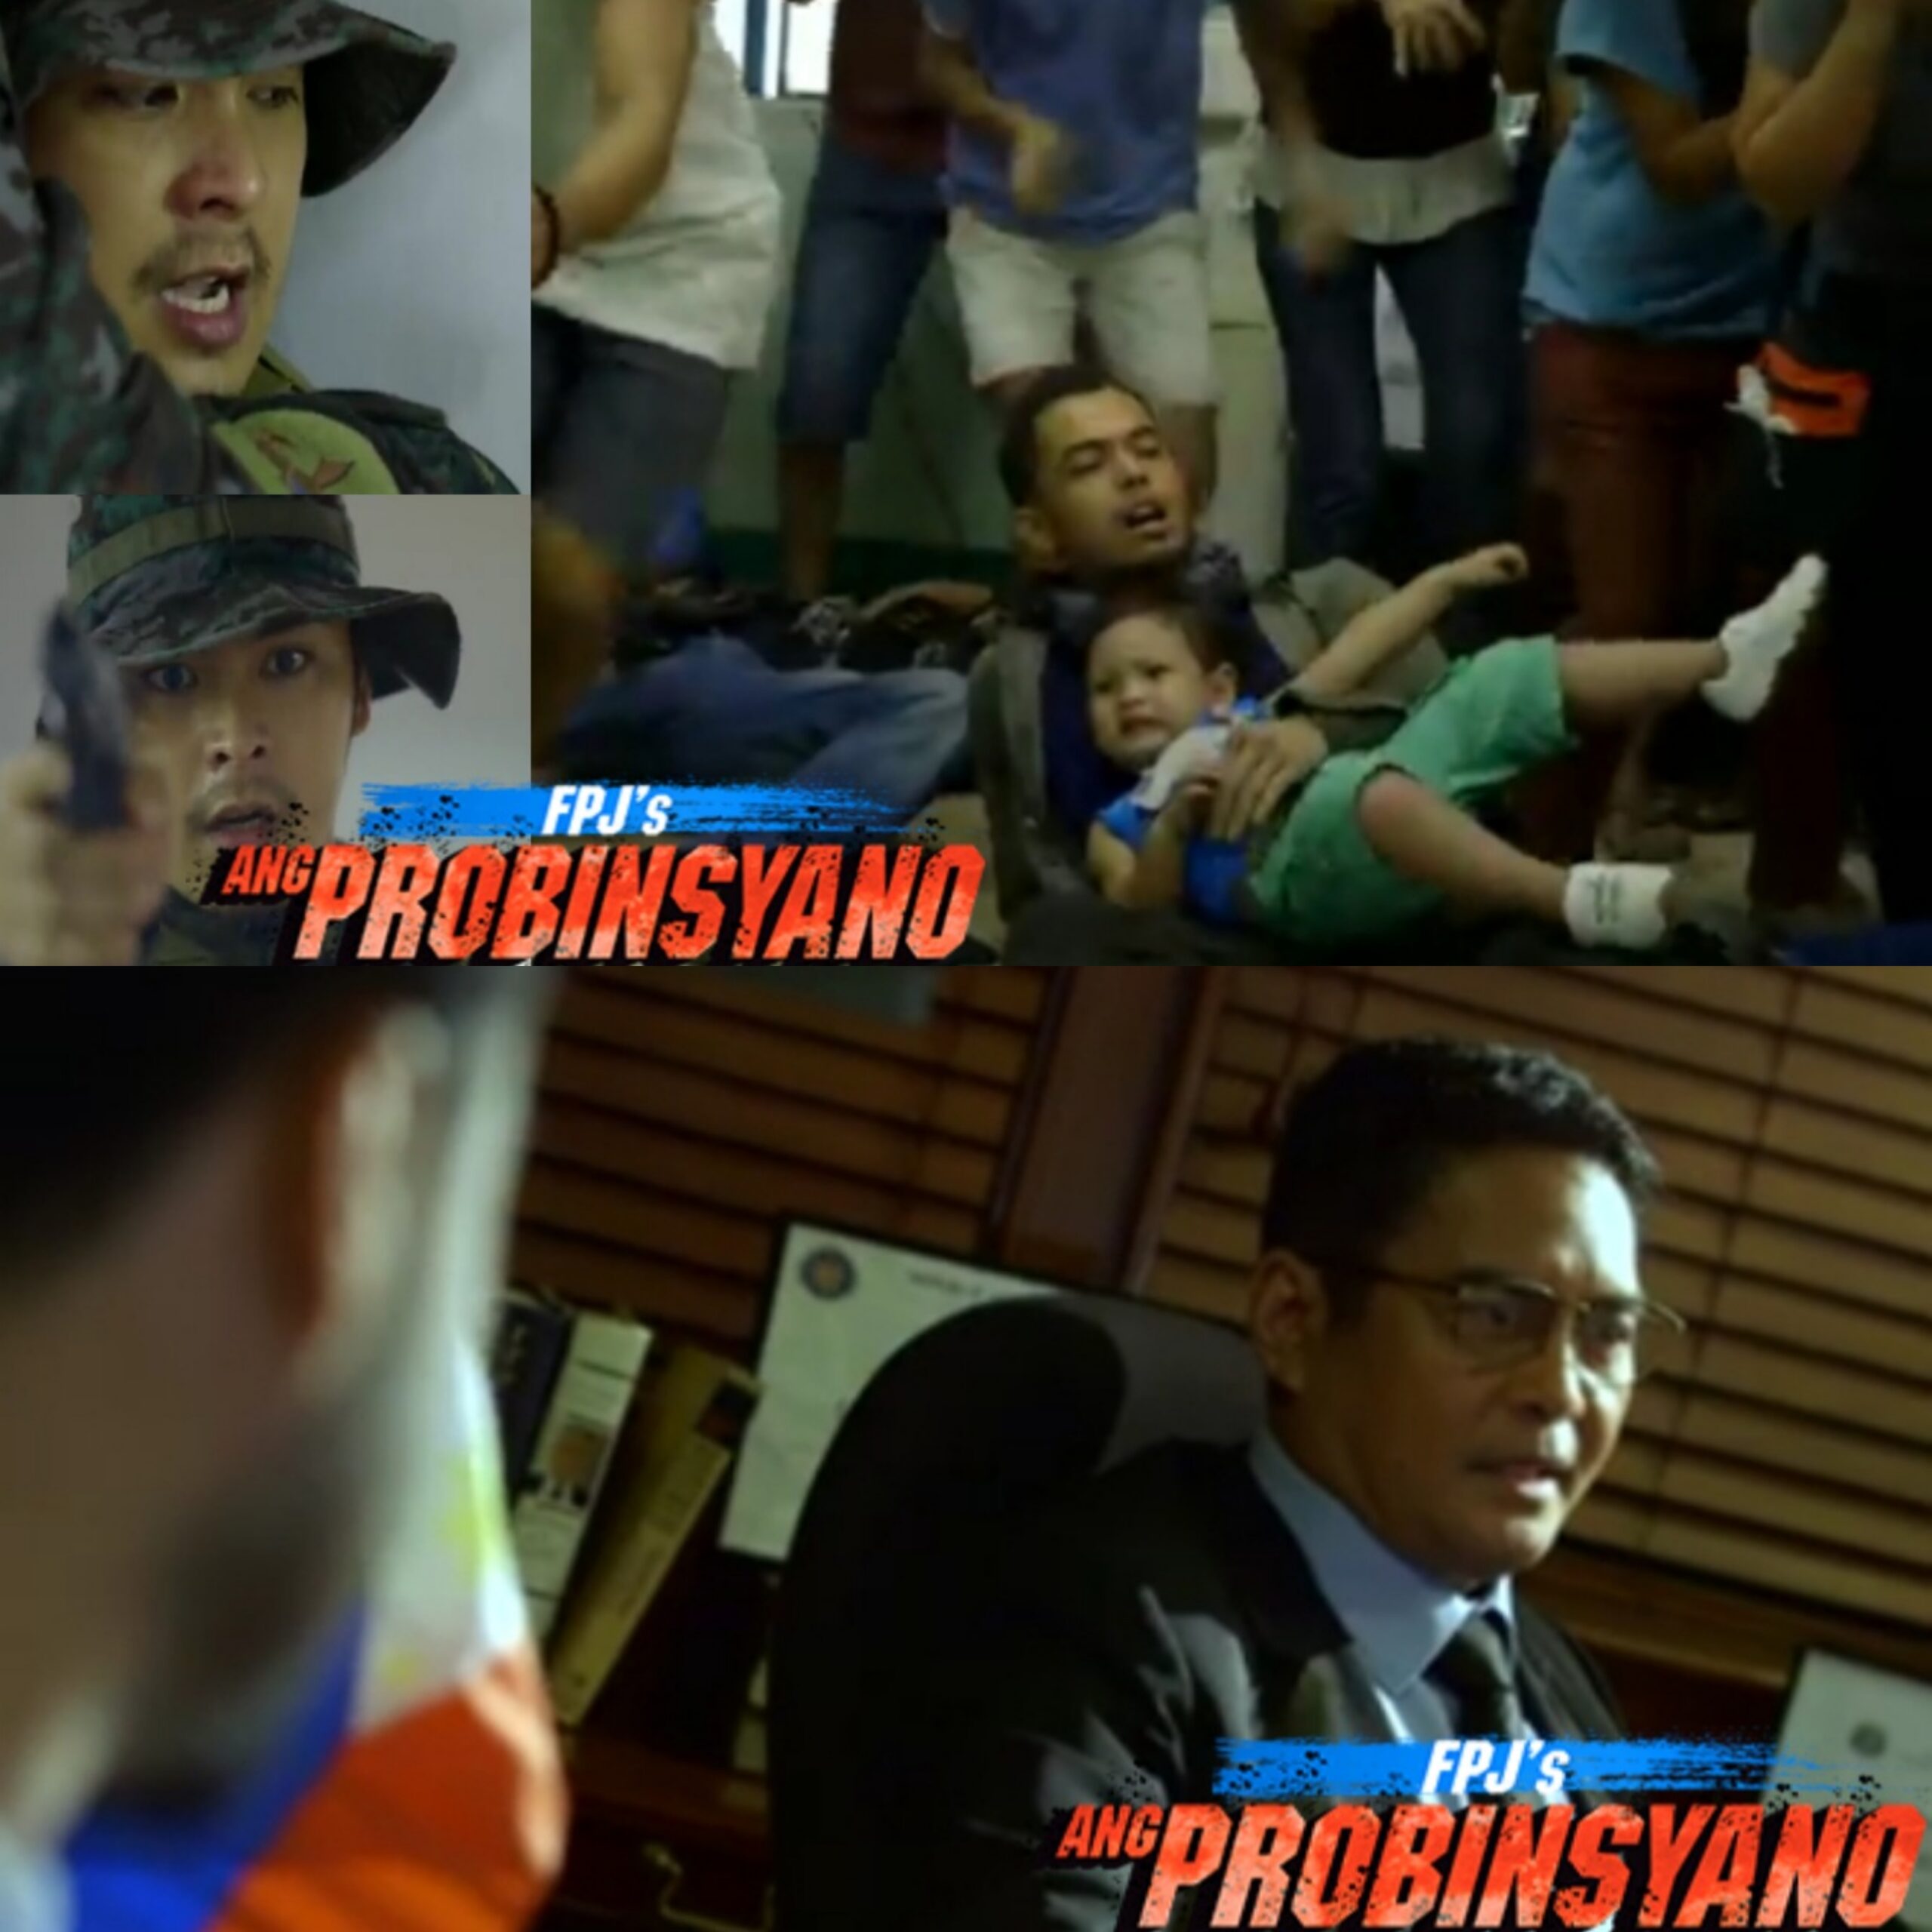 Brothers- Ang Probinsyano Episode 228